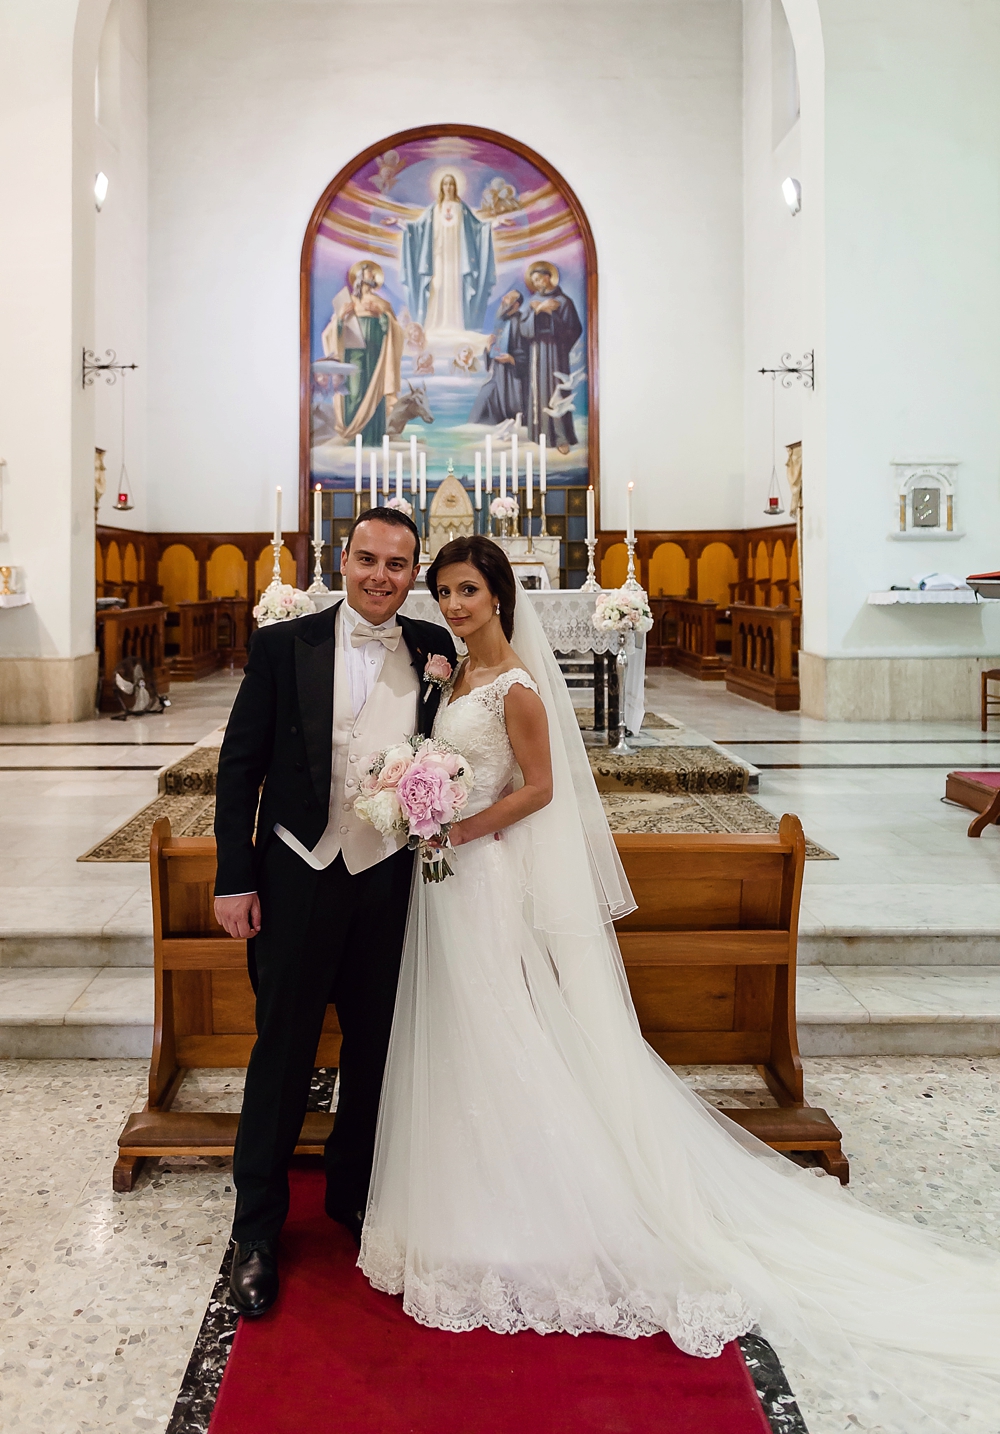 Maria & Fiobian - Excelsior Floriana - Wedding Photography Malta